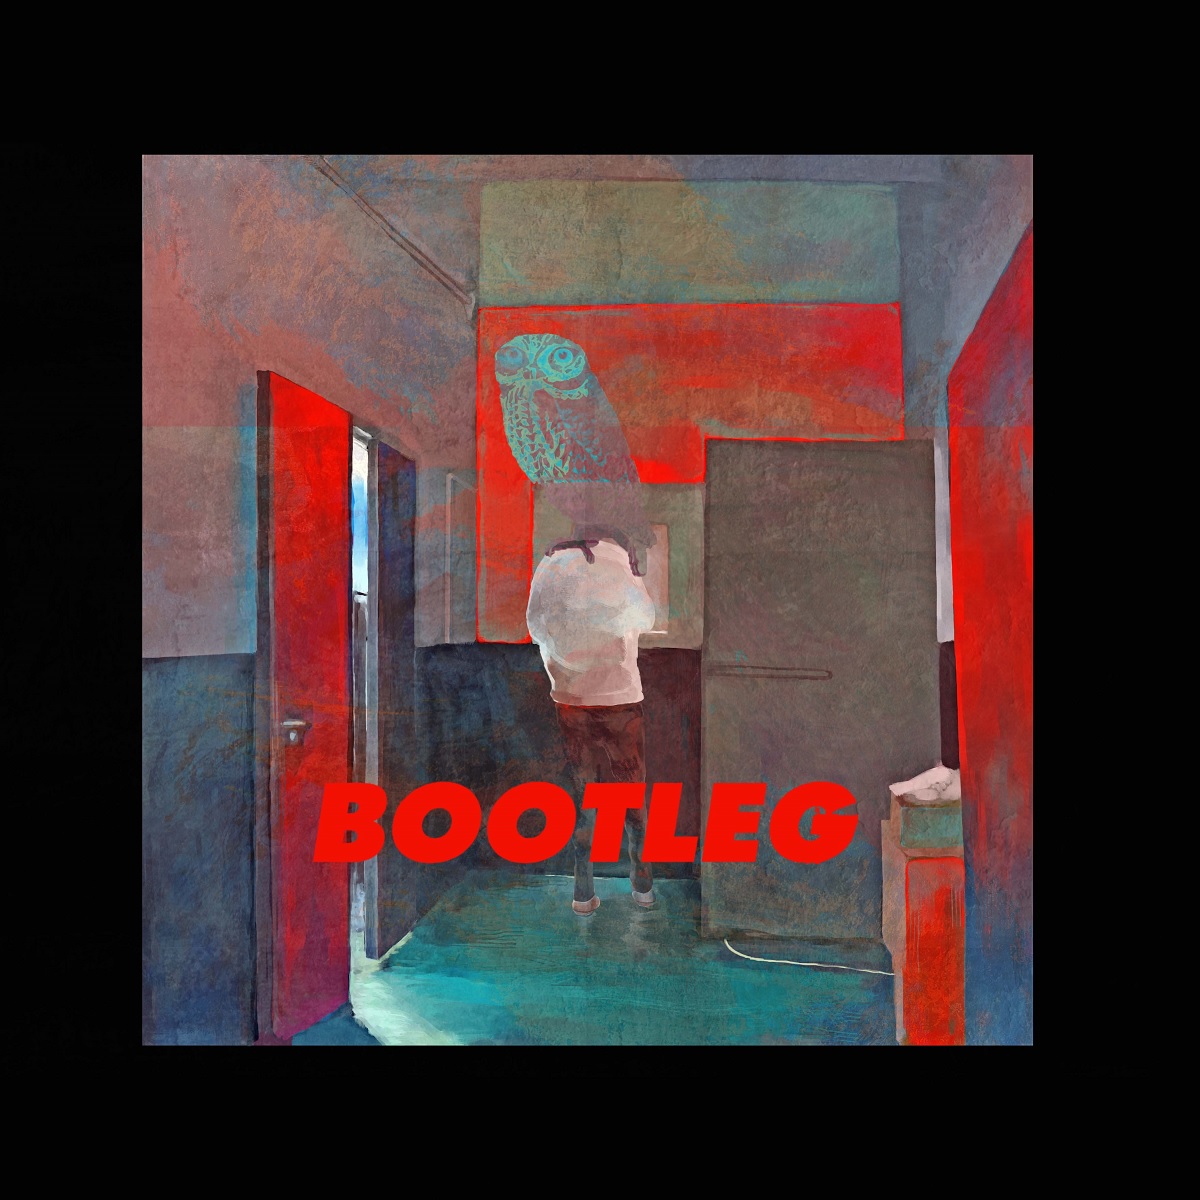 Cover art for『Kenshi Yonezu - Haiiro to Ao (+Masaki Suda)』from the release『BOOTLEG』